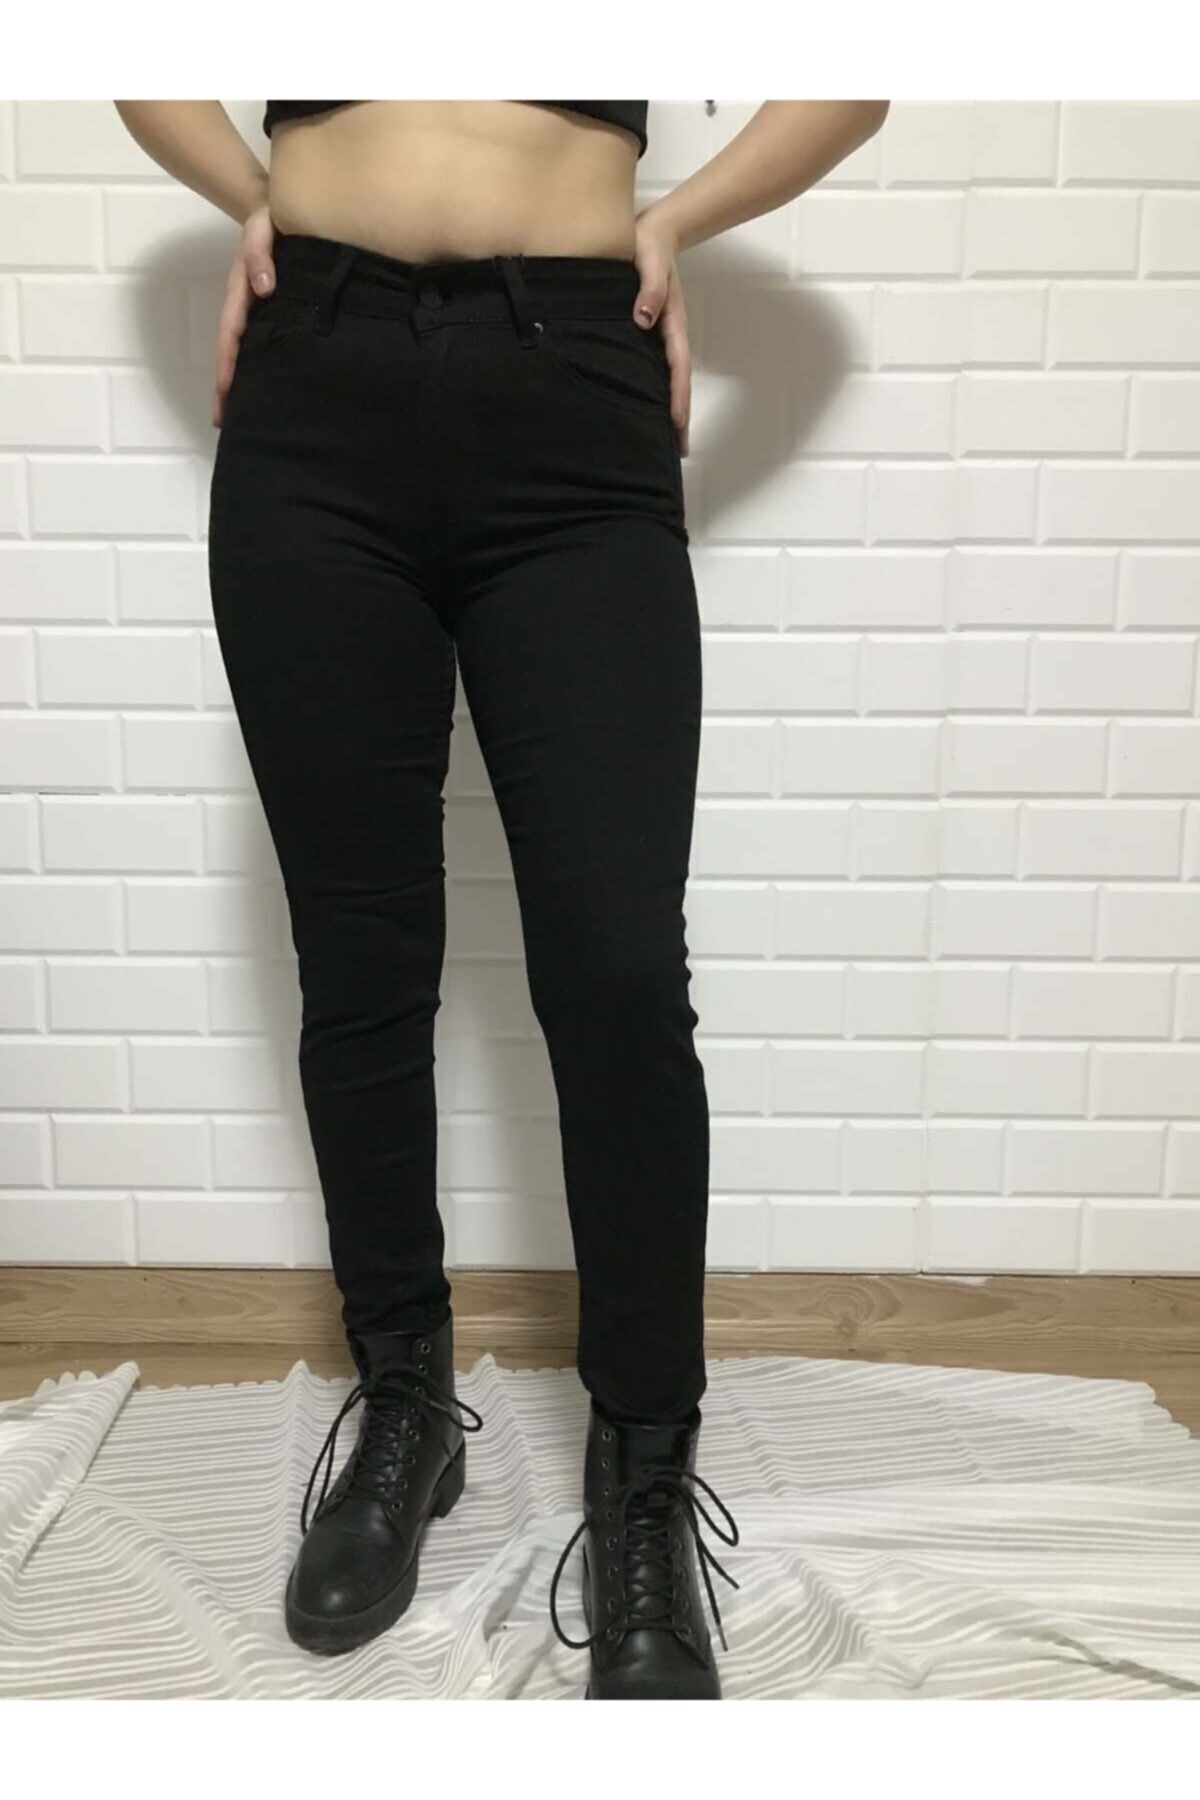 BULUTEX Siyah Kadın Skinny Jean